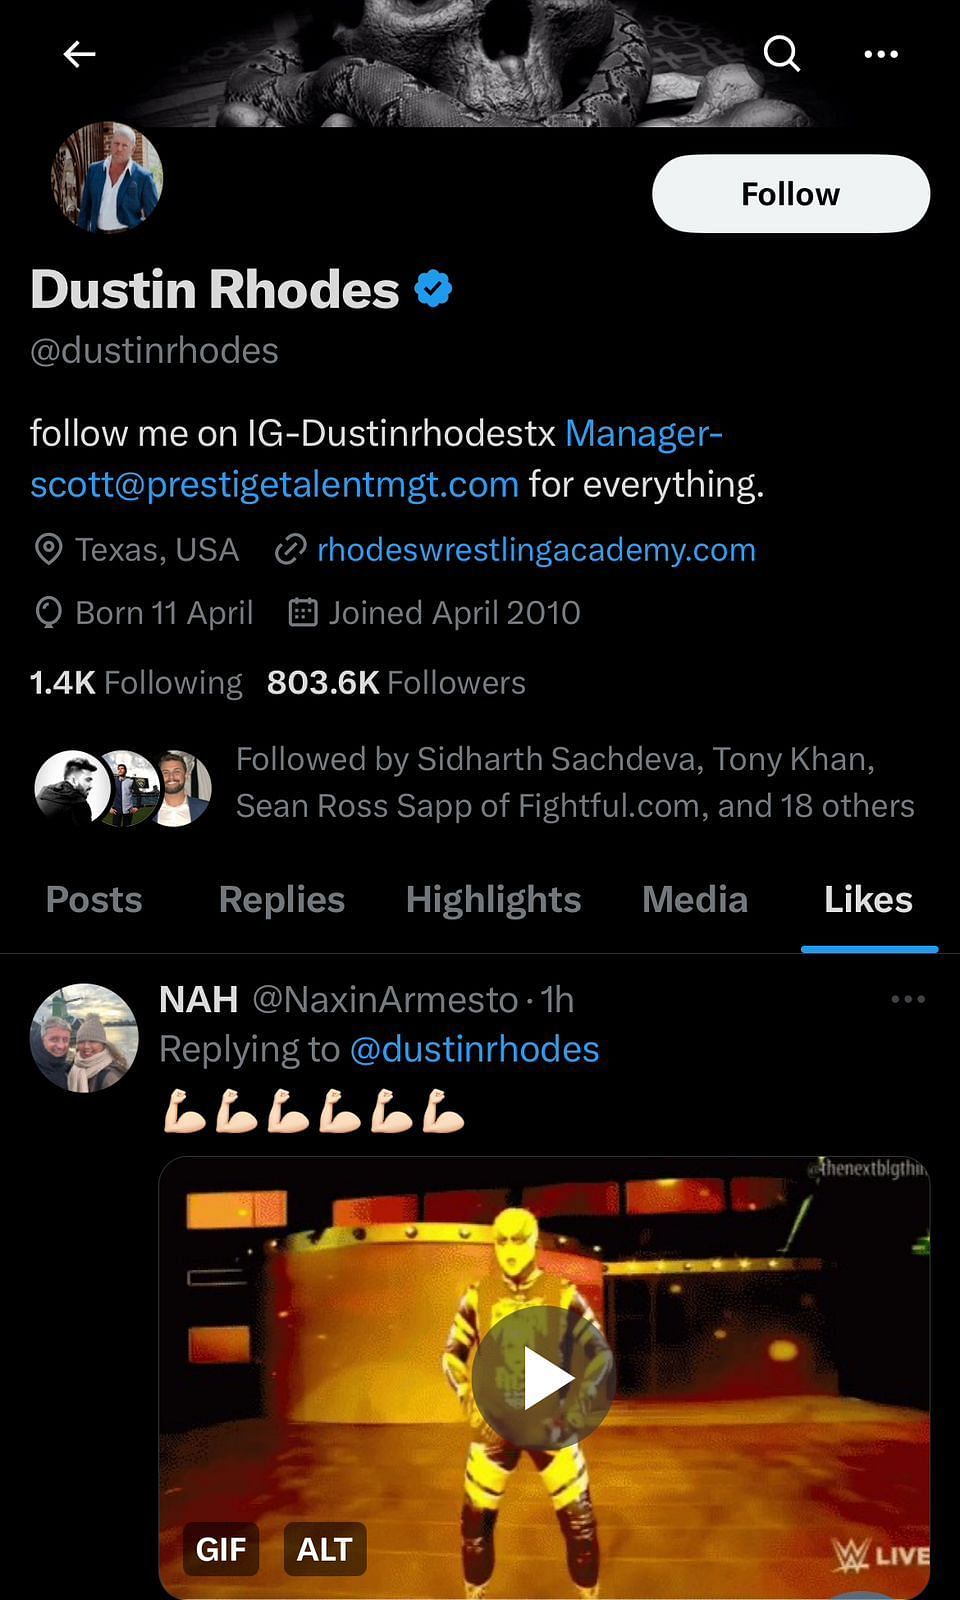 Screenshot of Dustin Rhodes liking the tweet